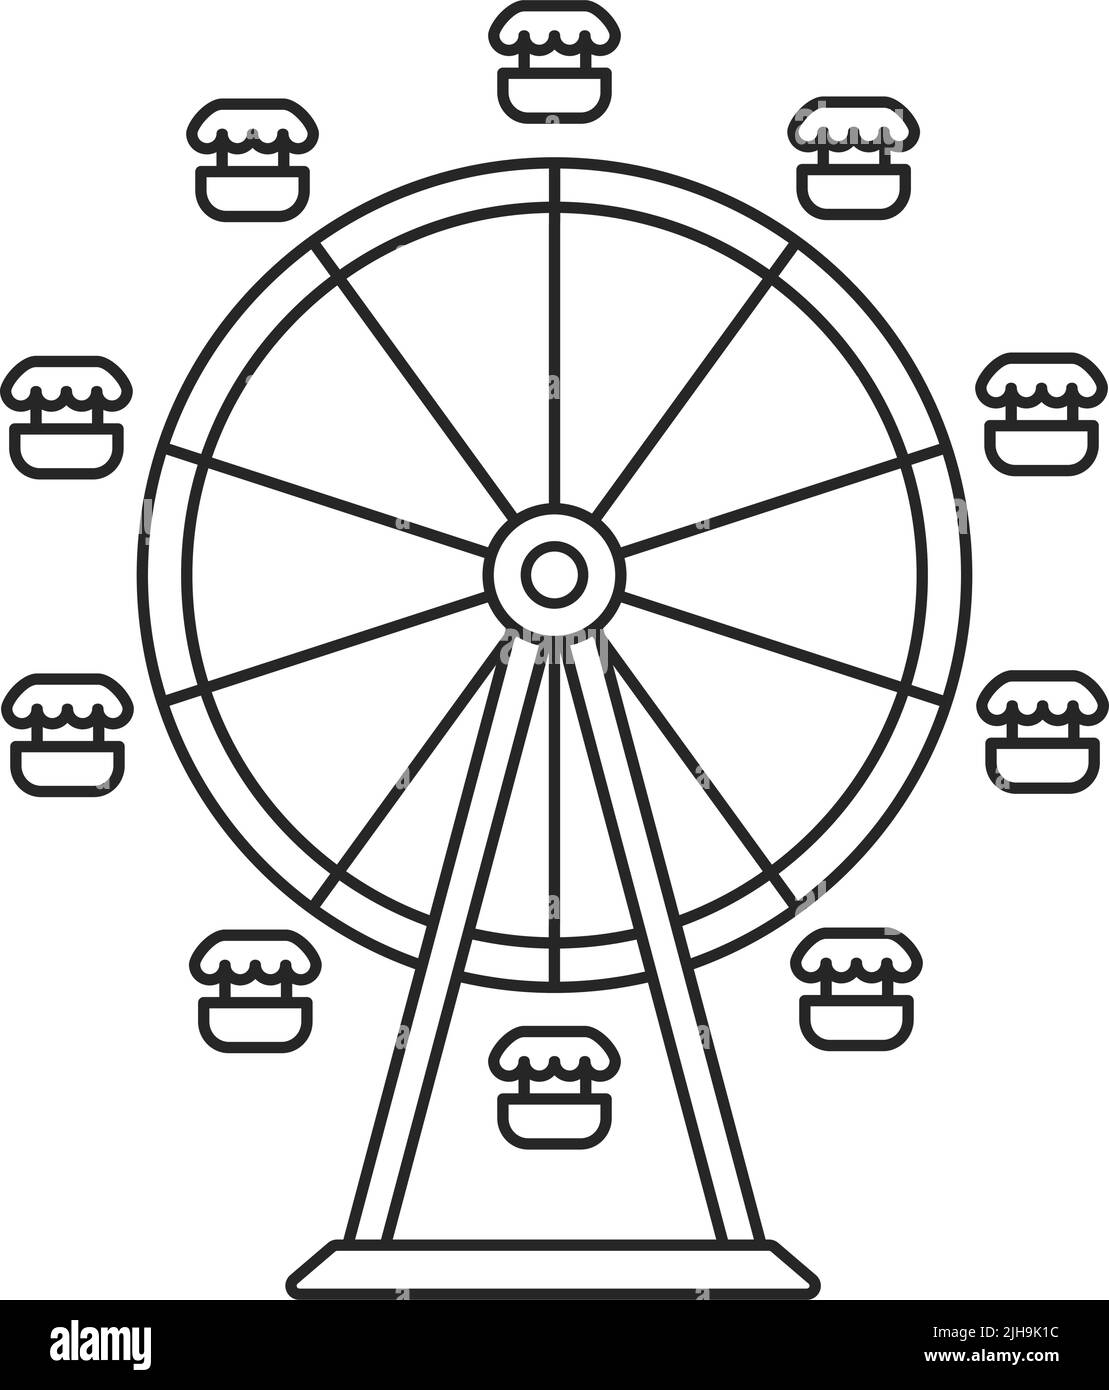 Ferris wheel for a fair or amusement park ride as a simple outline vector icon Stock Vector